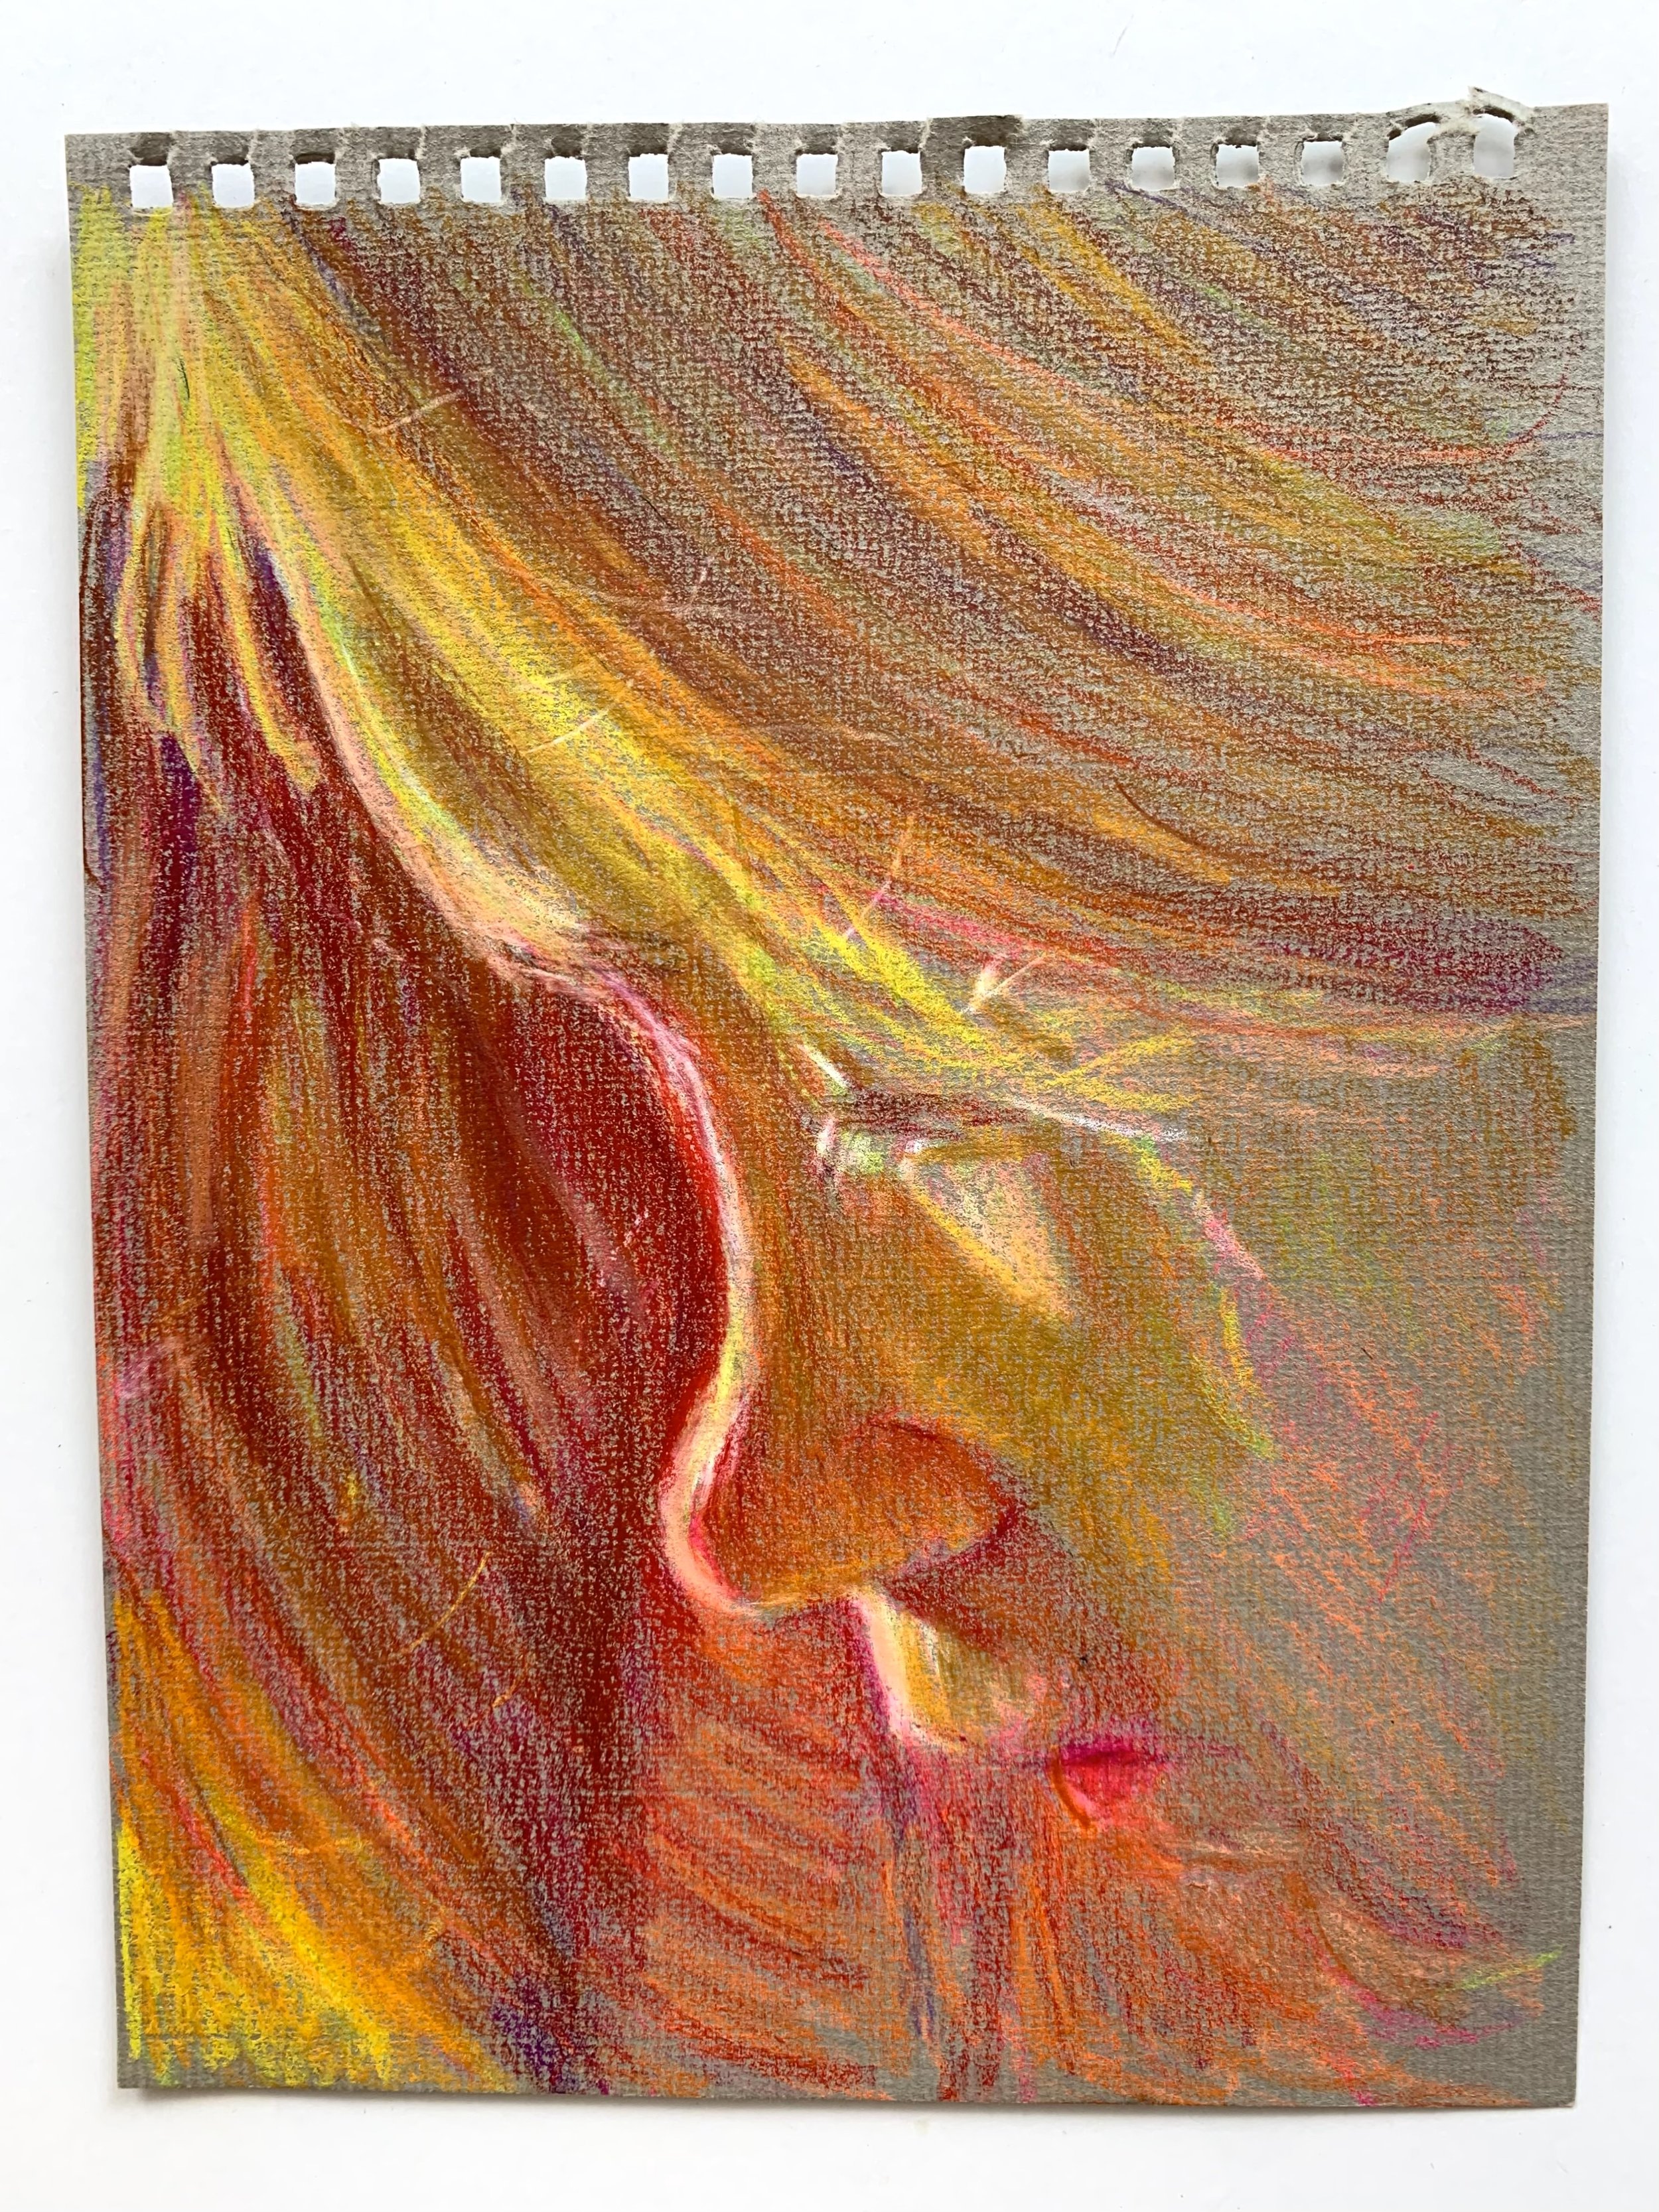  Syd, 2022  Prismacolor pencil and Caran d’ache crayon on toned paper  20.5 x 15.5 cm 